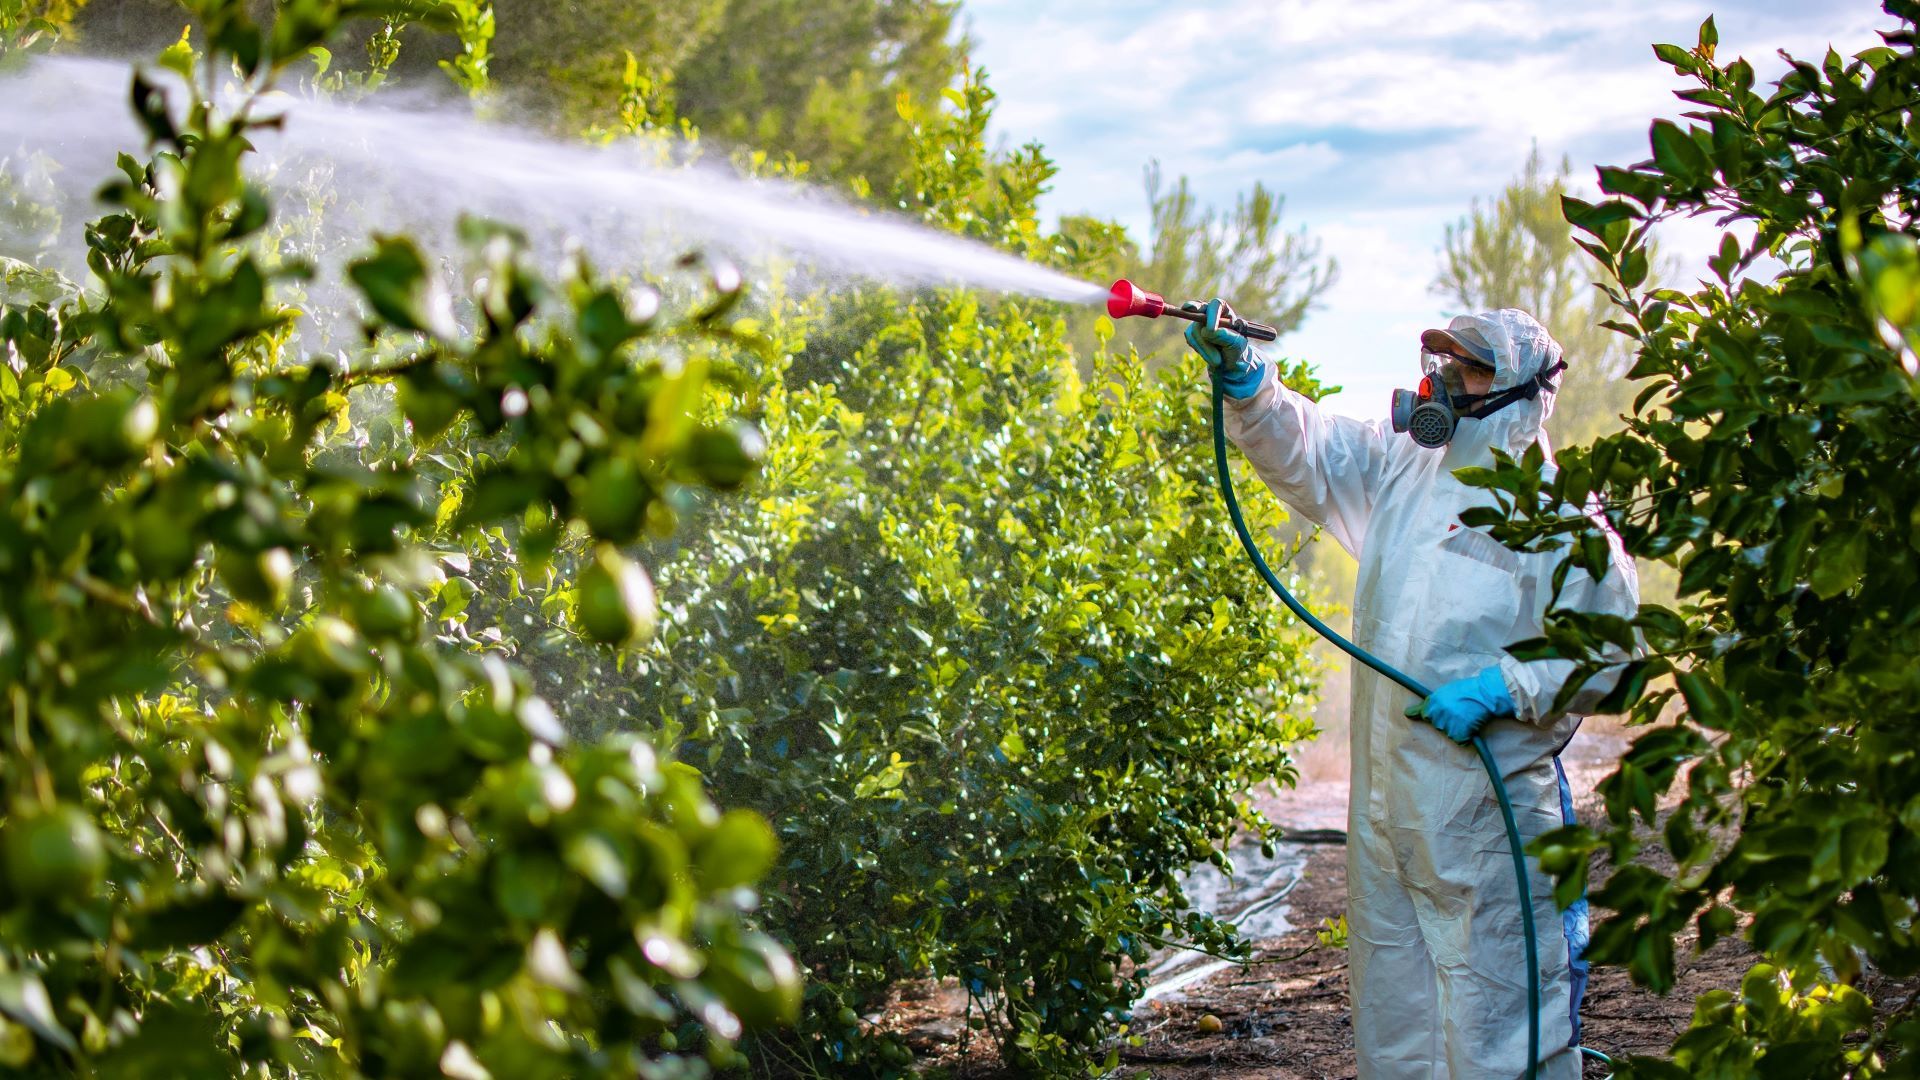 Pesticide farmer plants enviroment